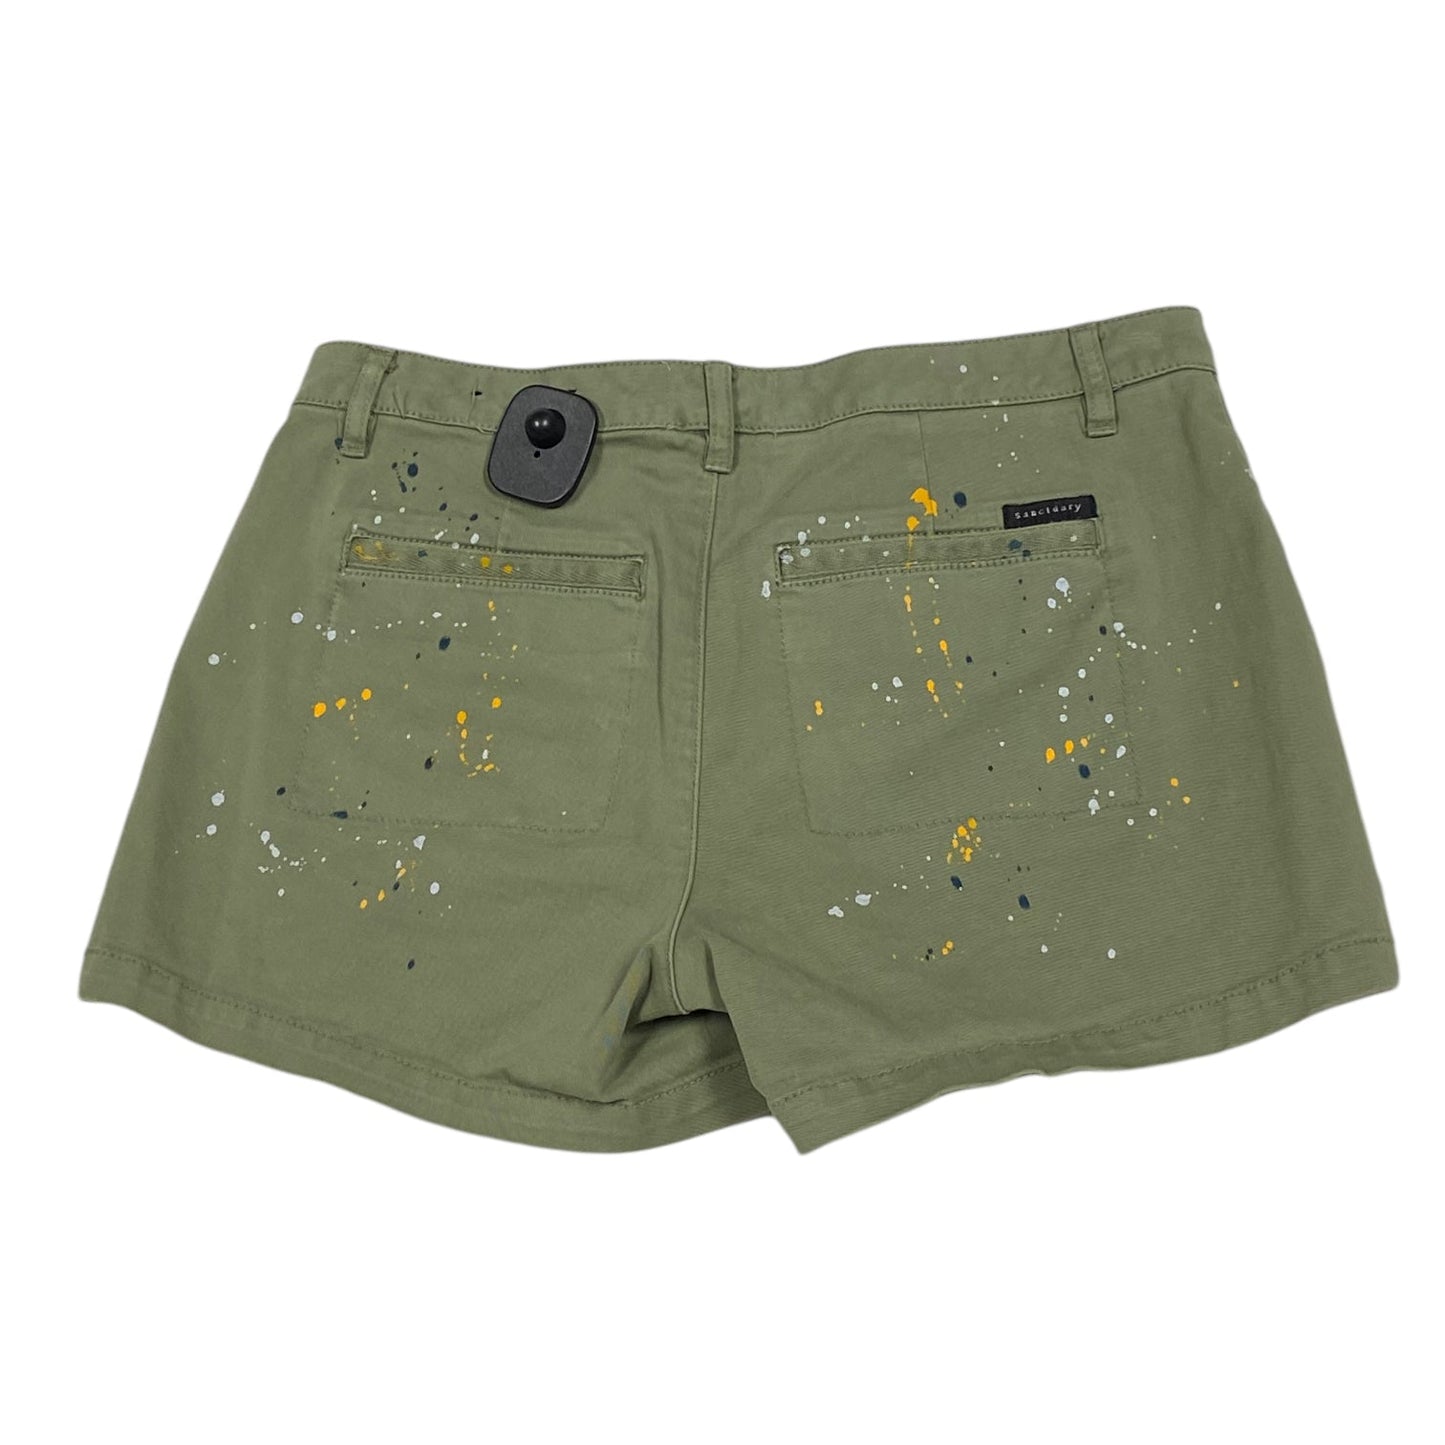 Shorts By Sanctuary  Size: 0